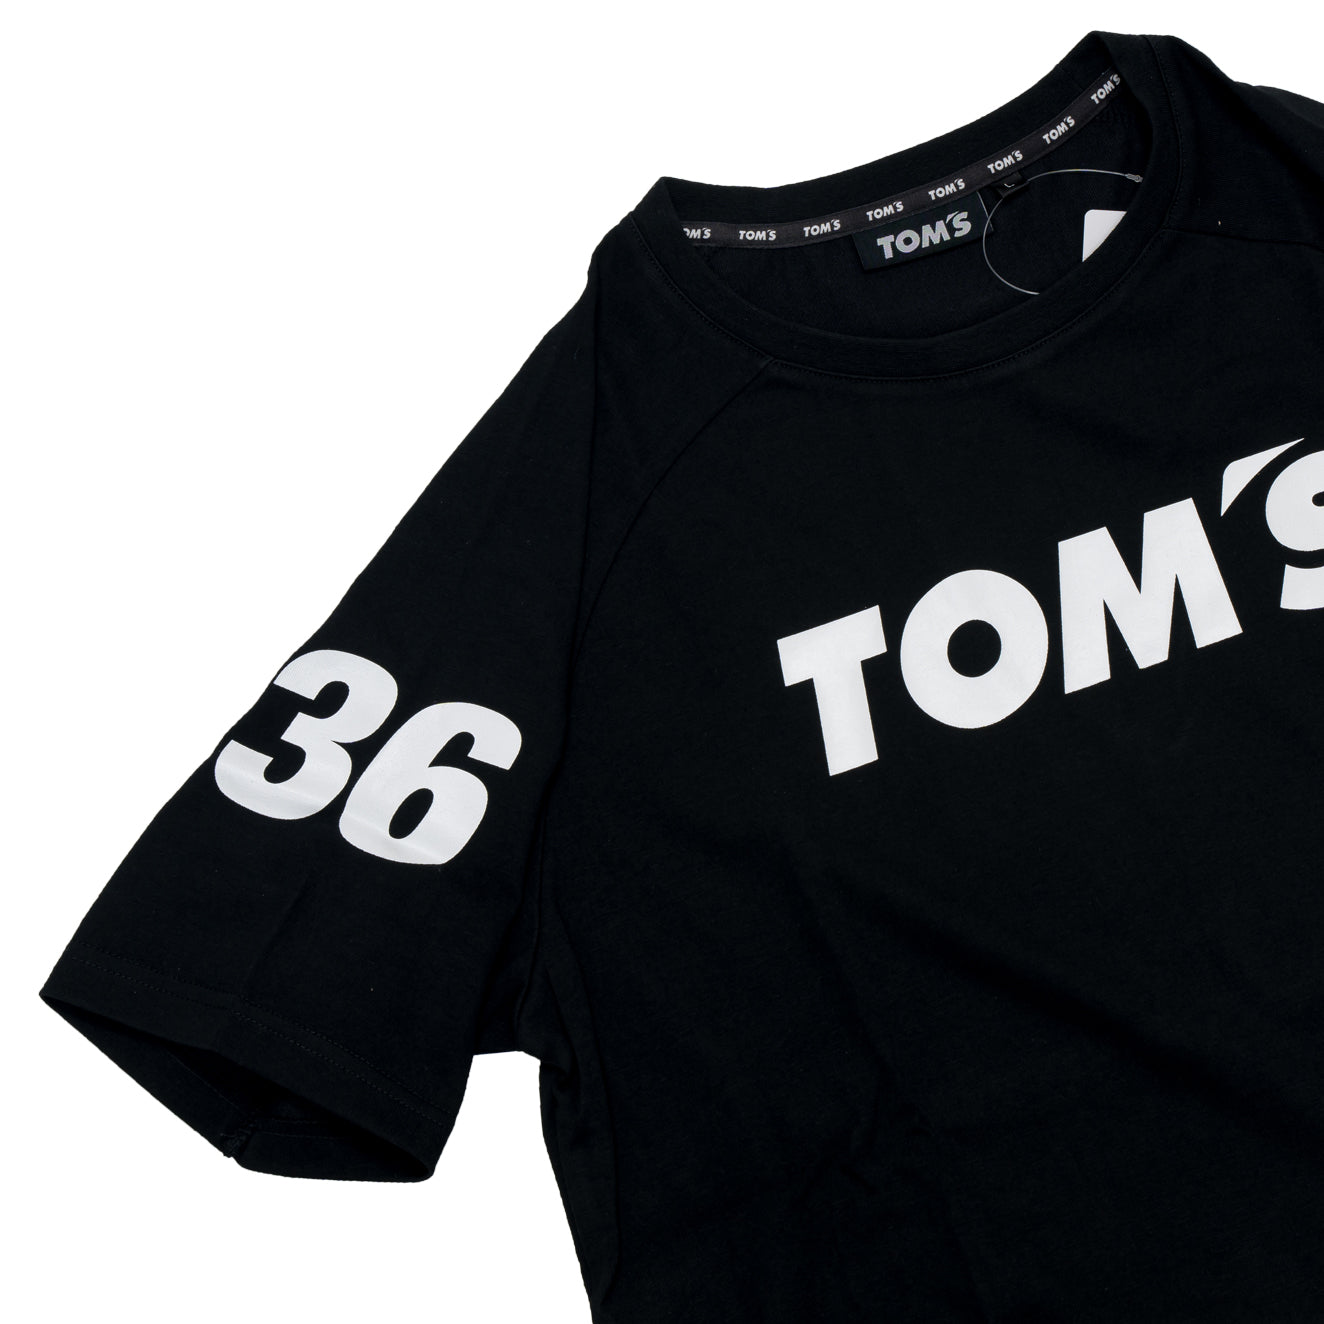 TOM'S Racing - Short Sleeve T-shirt #36 Black